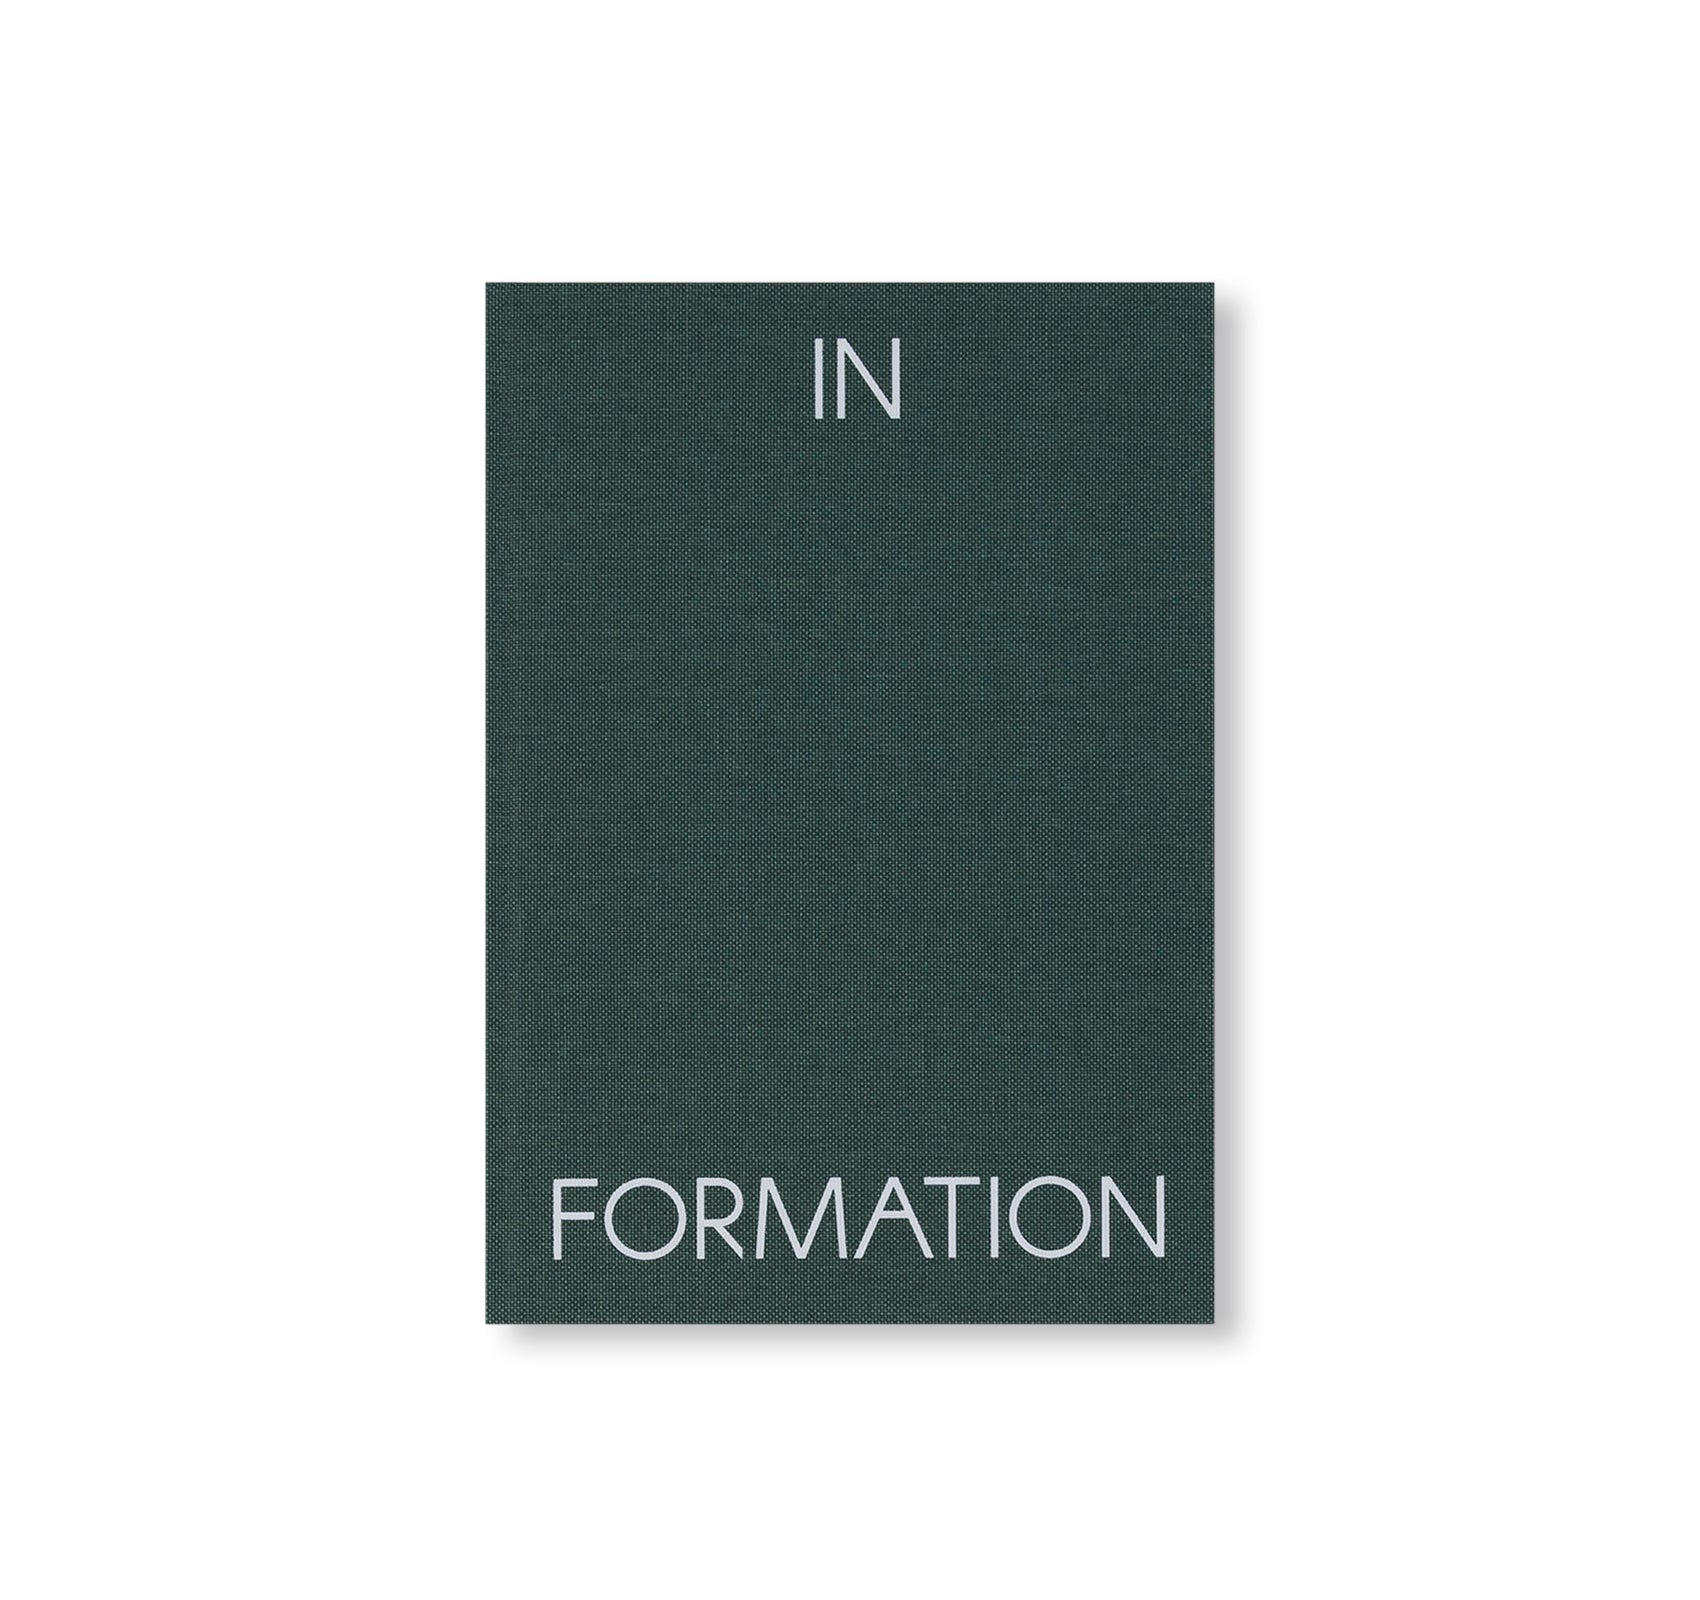 IN FORMATION by Antony Gormley